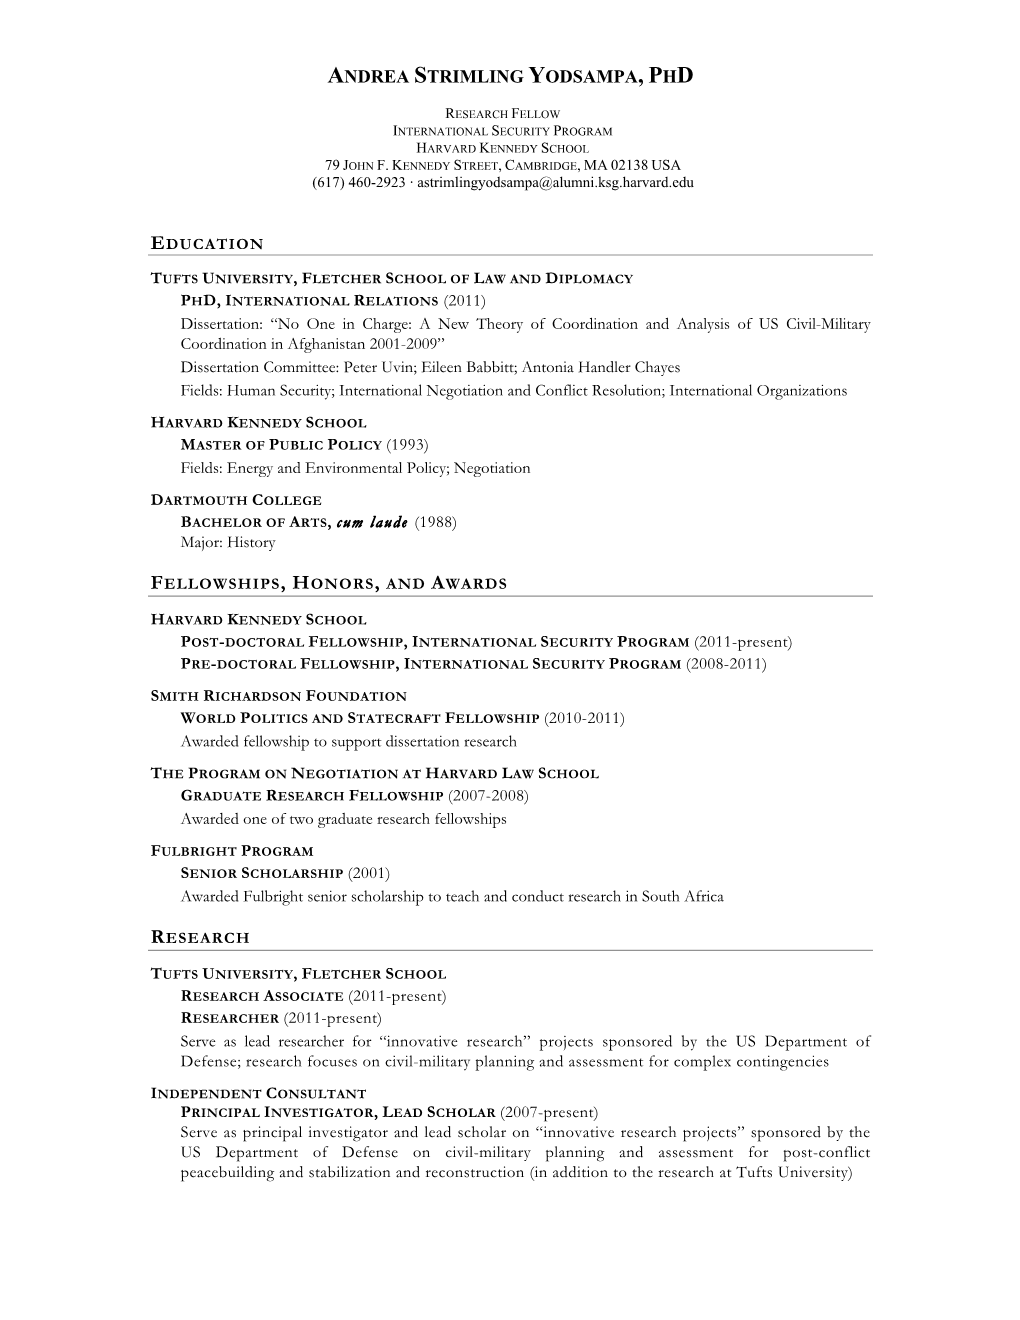 Strimling Yodsampa CV Research 0611